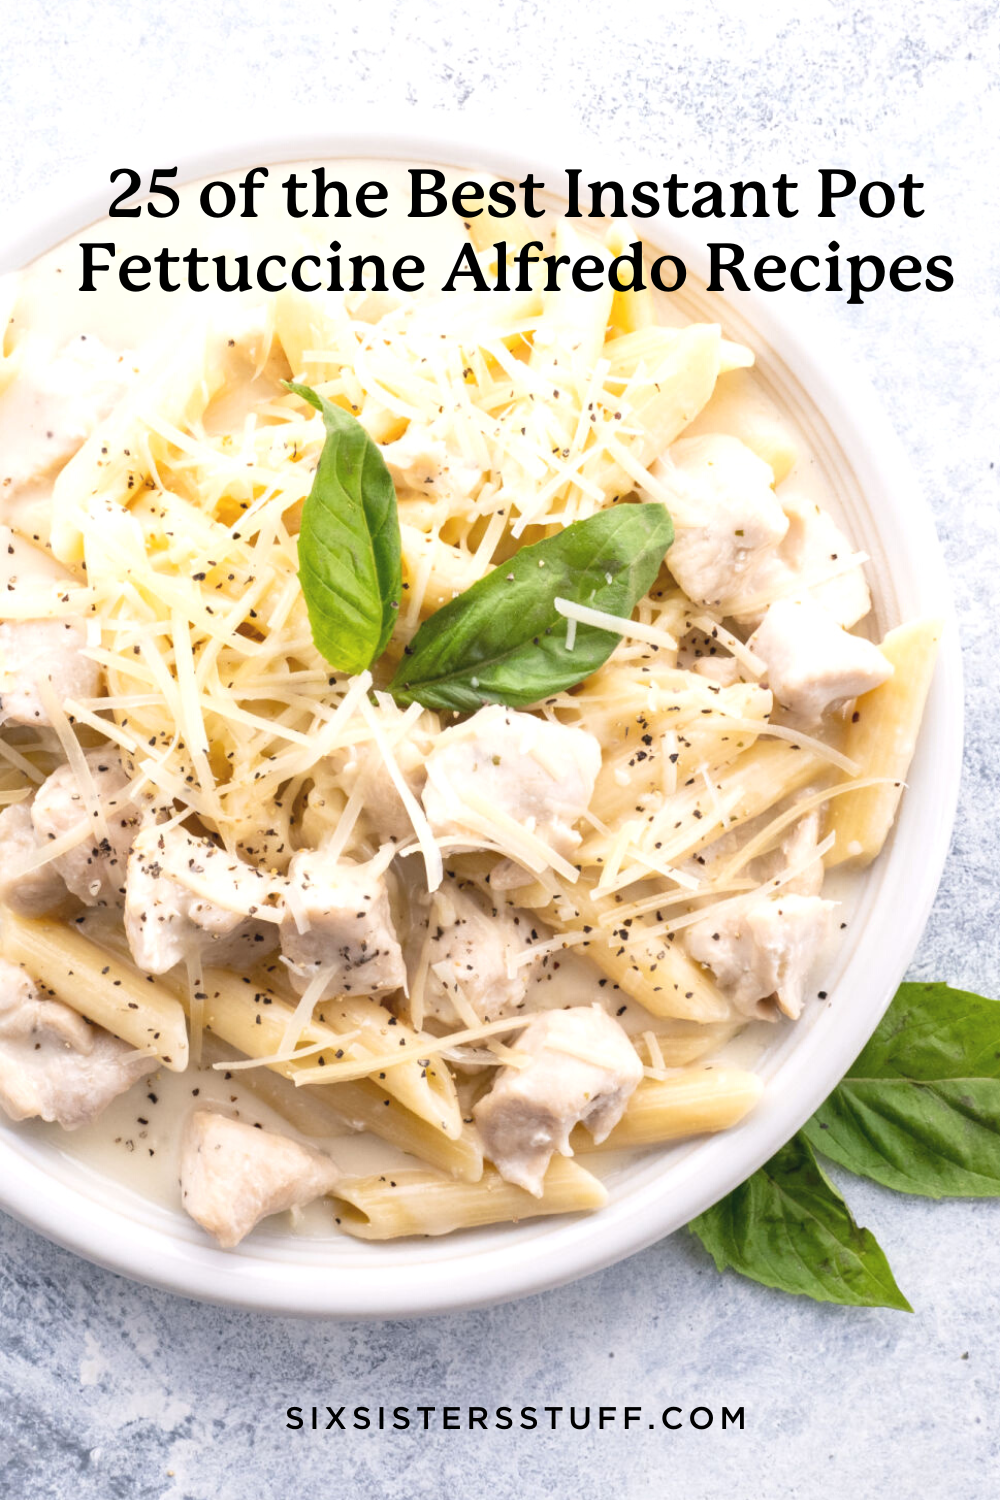 25 of the Best Instant Pot Fettuccine Alfredo Recipes